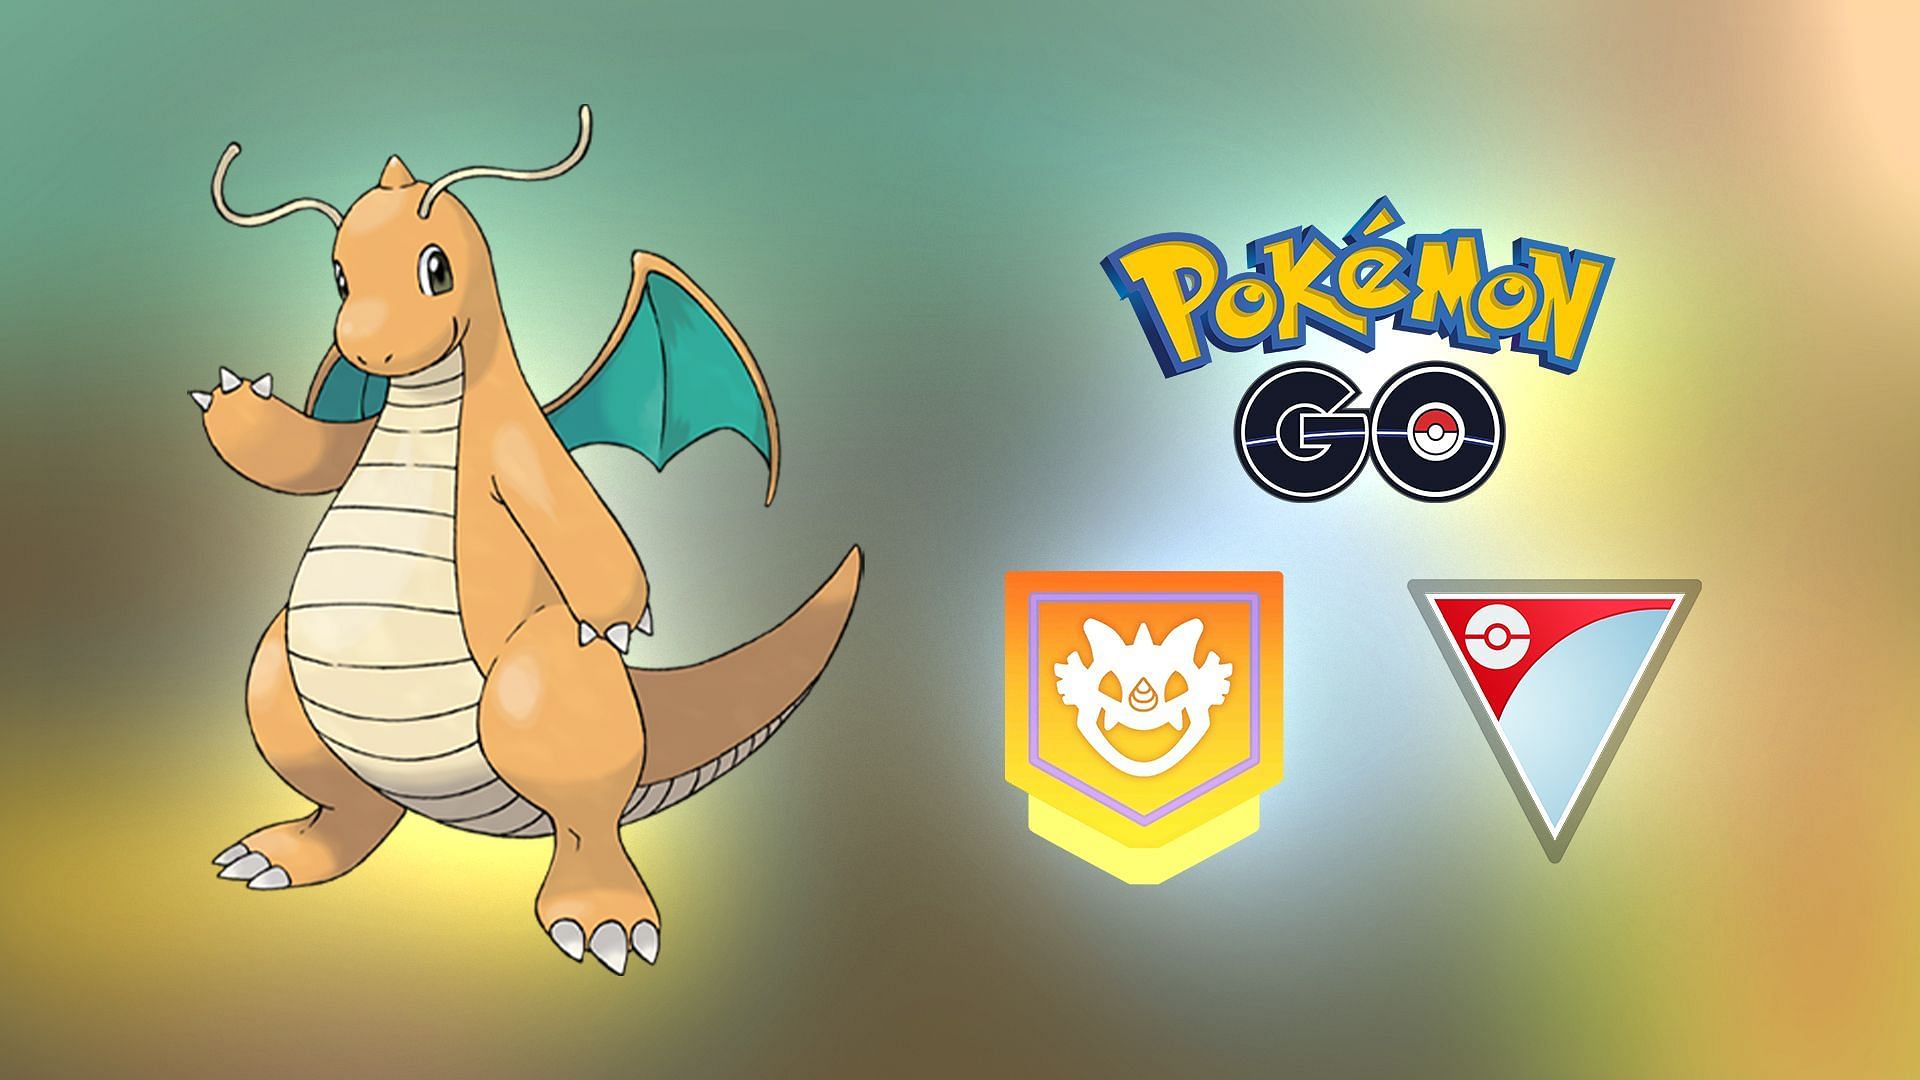 Dragonite along with pokemon go logo